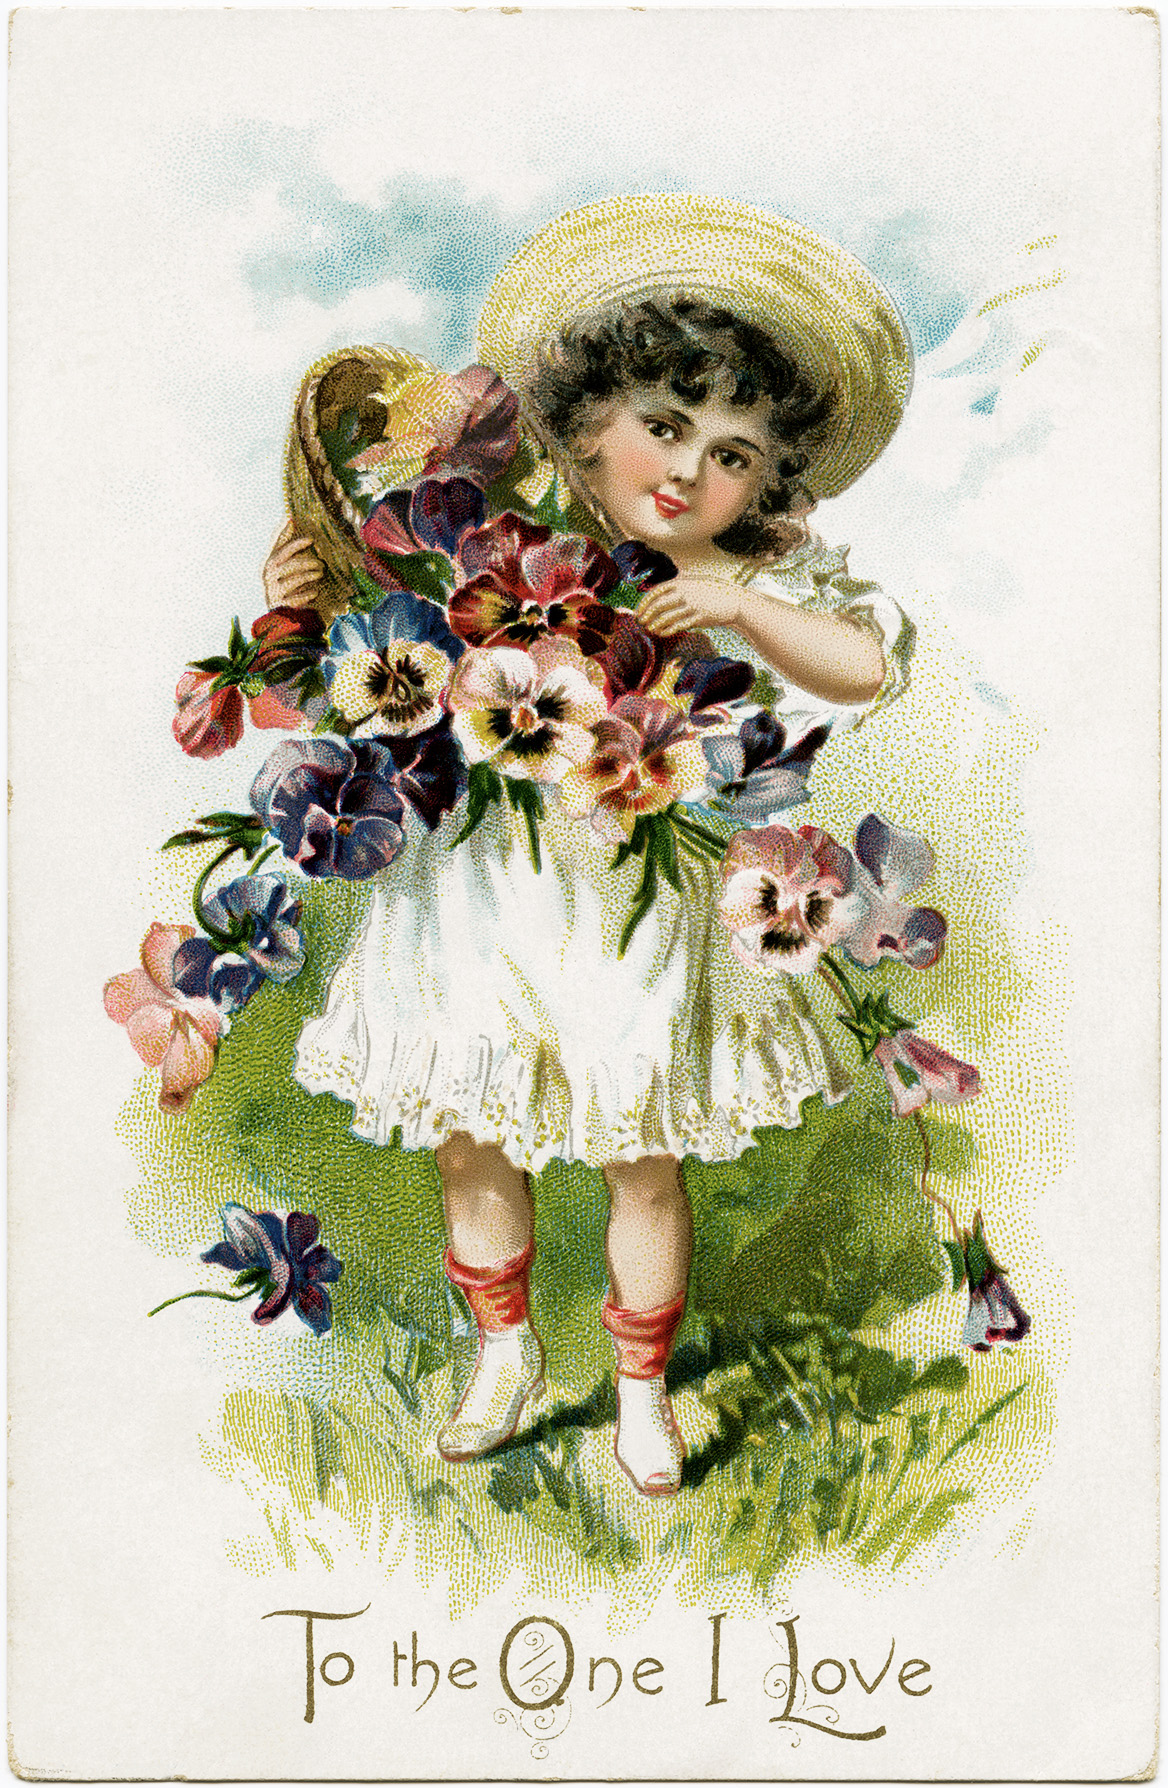 Victorian girl clipart, old postcard graphics, vintage flower girl, public domain child image, antique love card